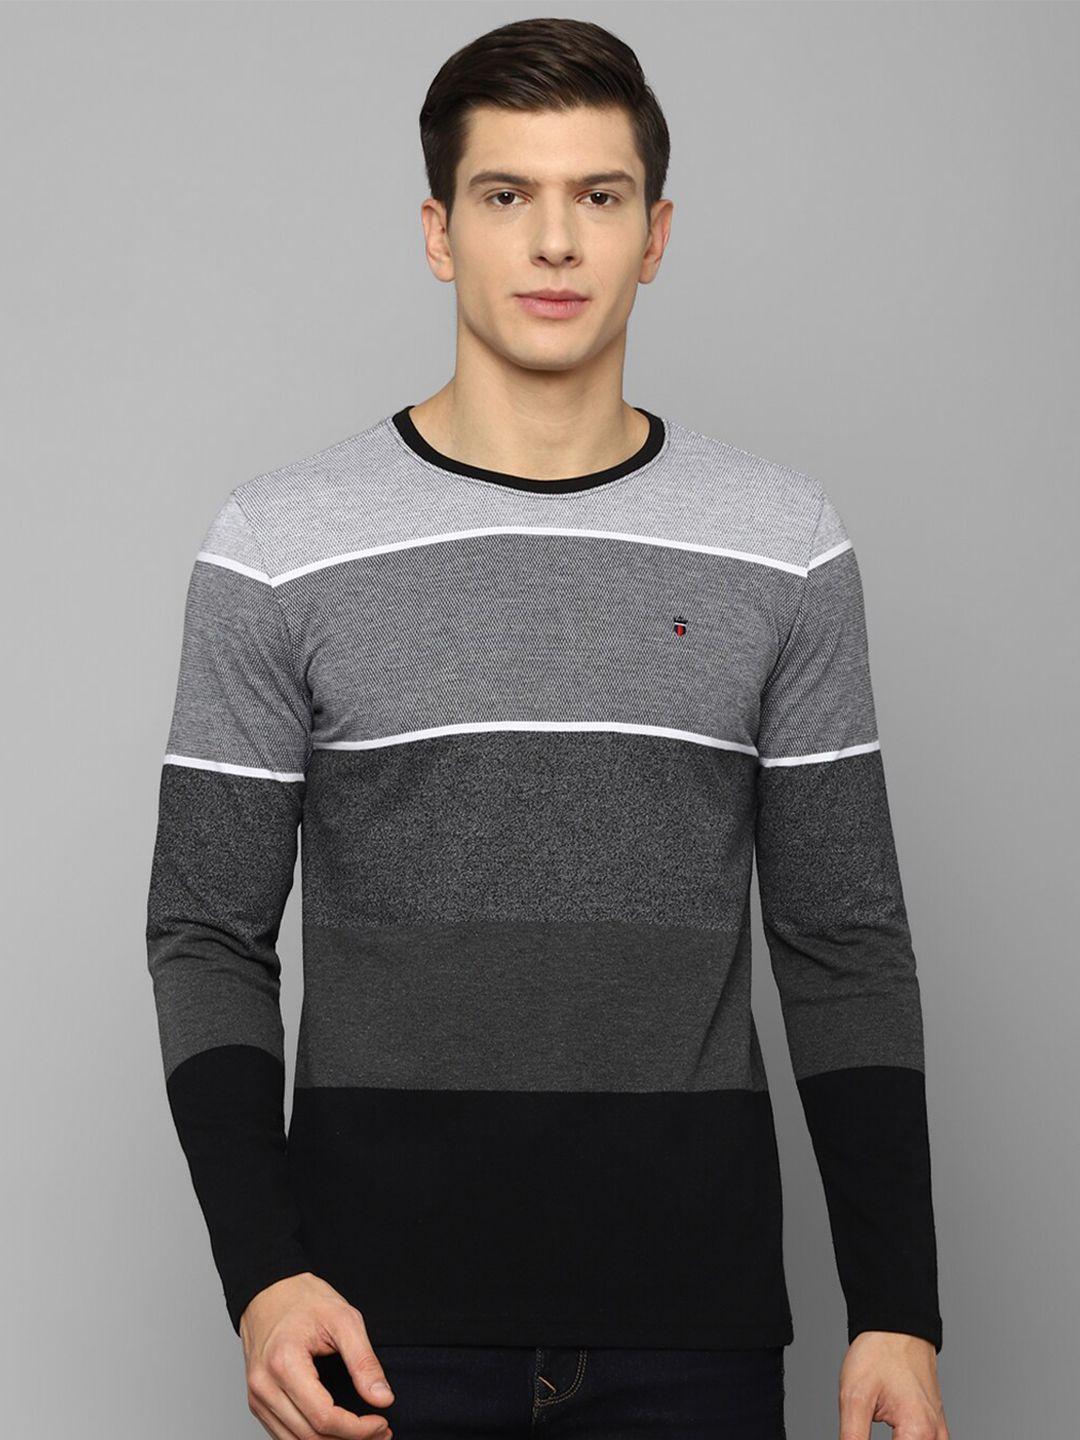 louis-philippe-sport-men-grey-&-black-striped-slim-fit-long-sleeves-t-shirt